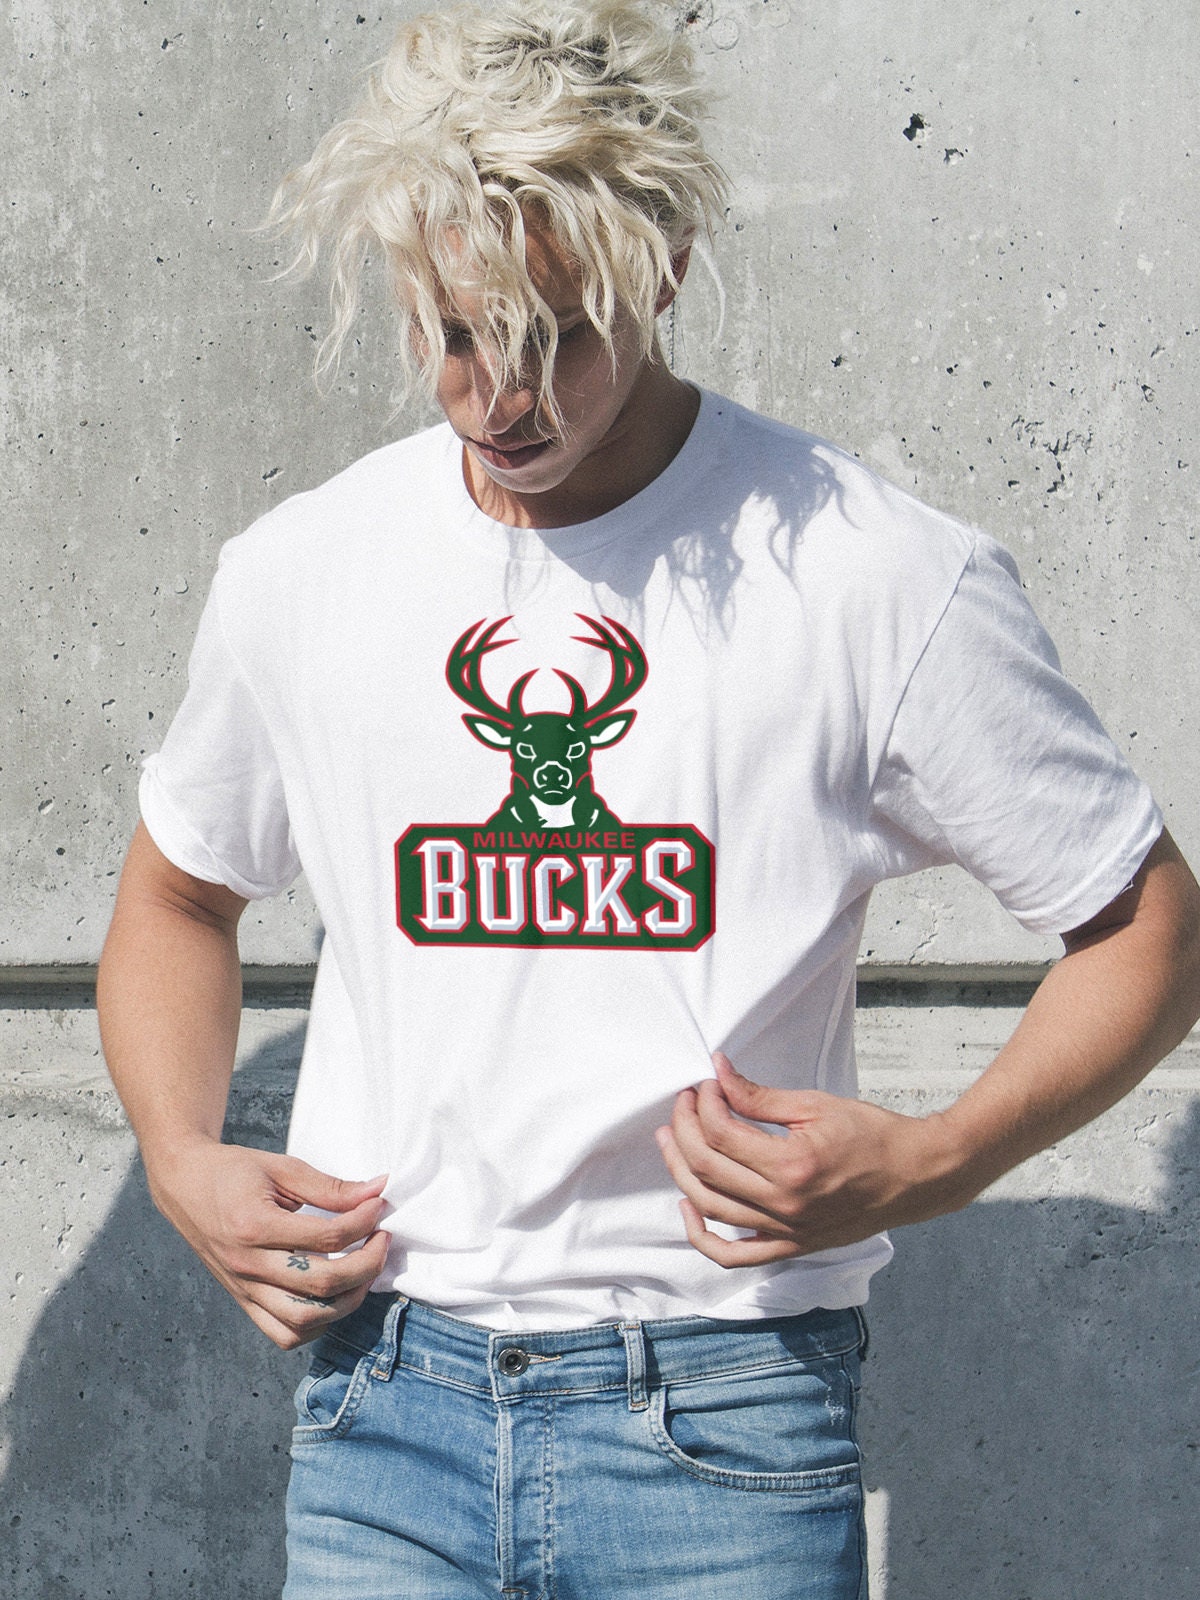 bucks shirt women's